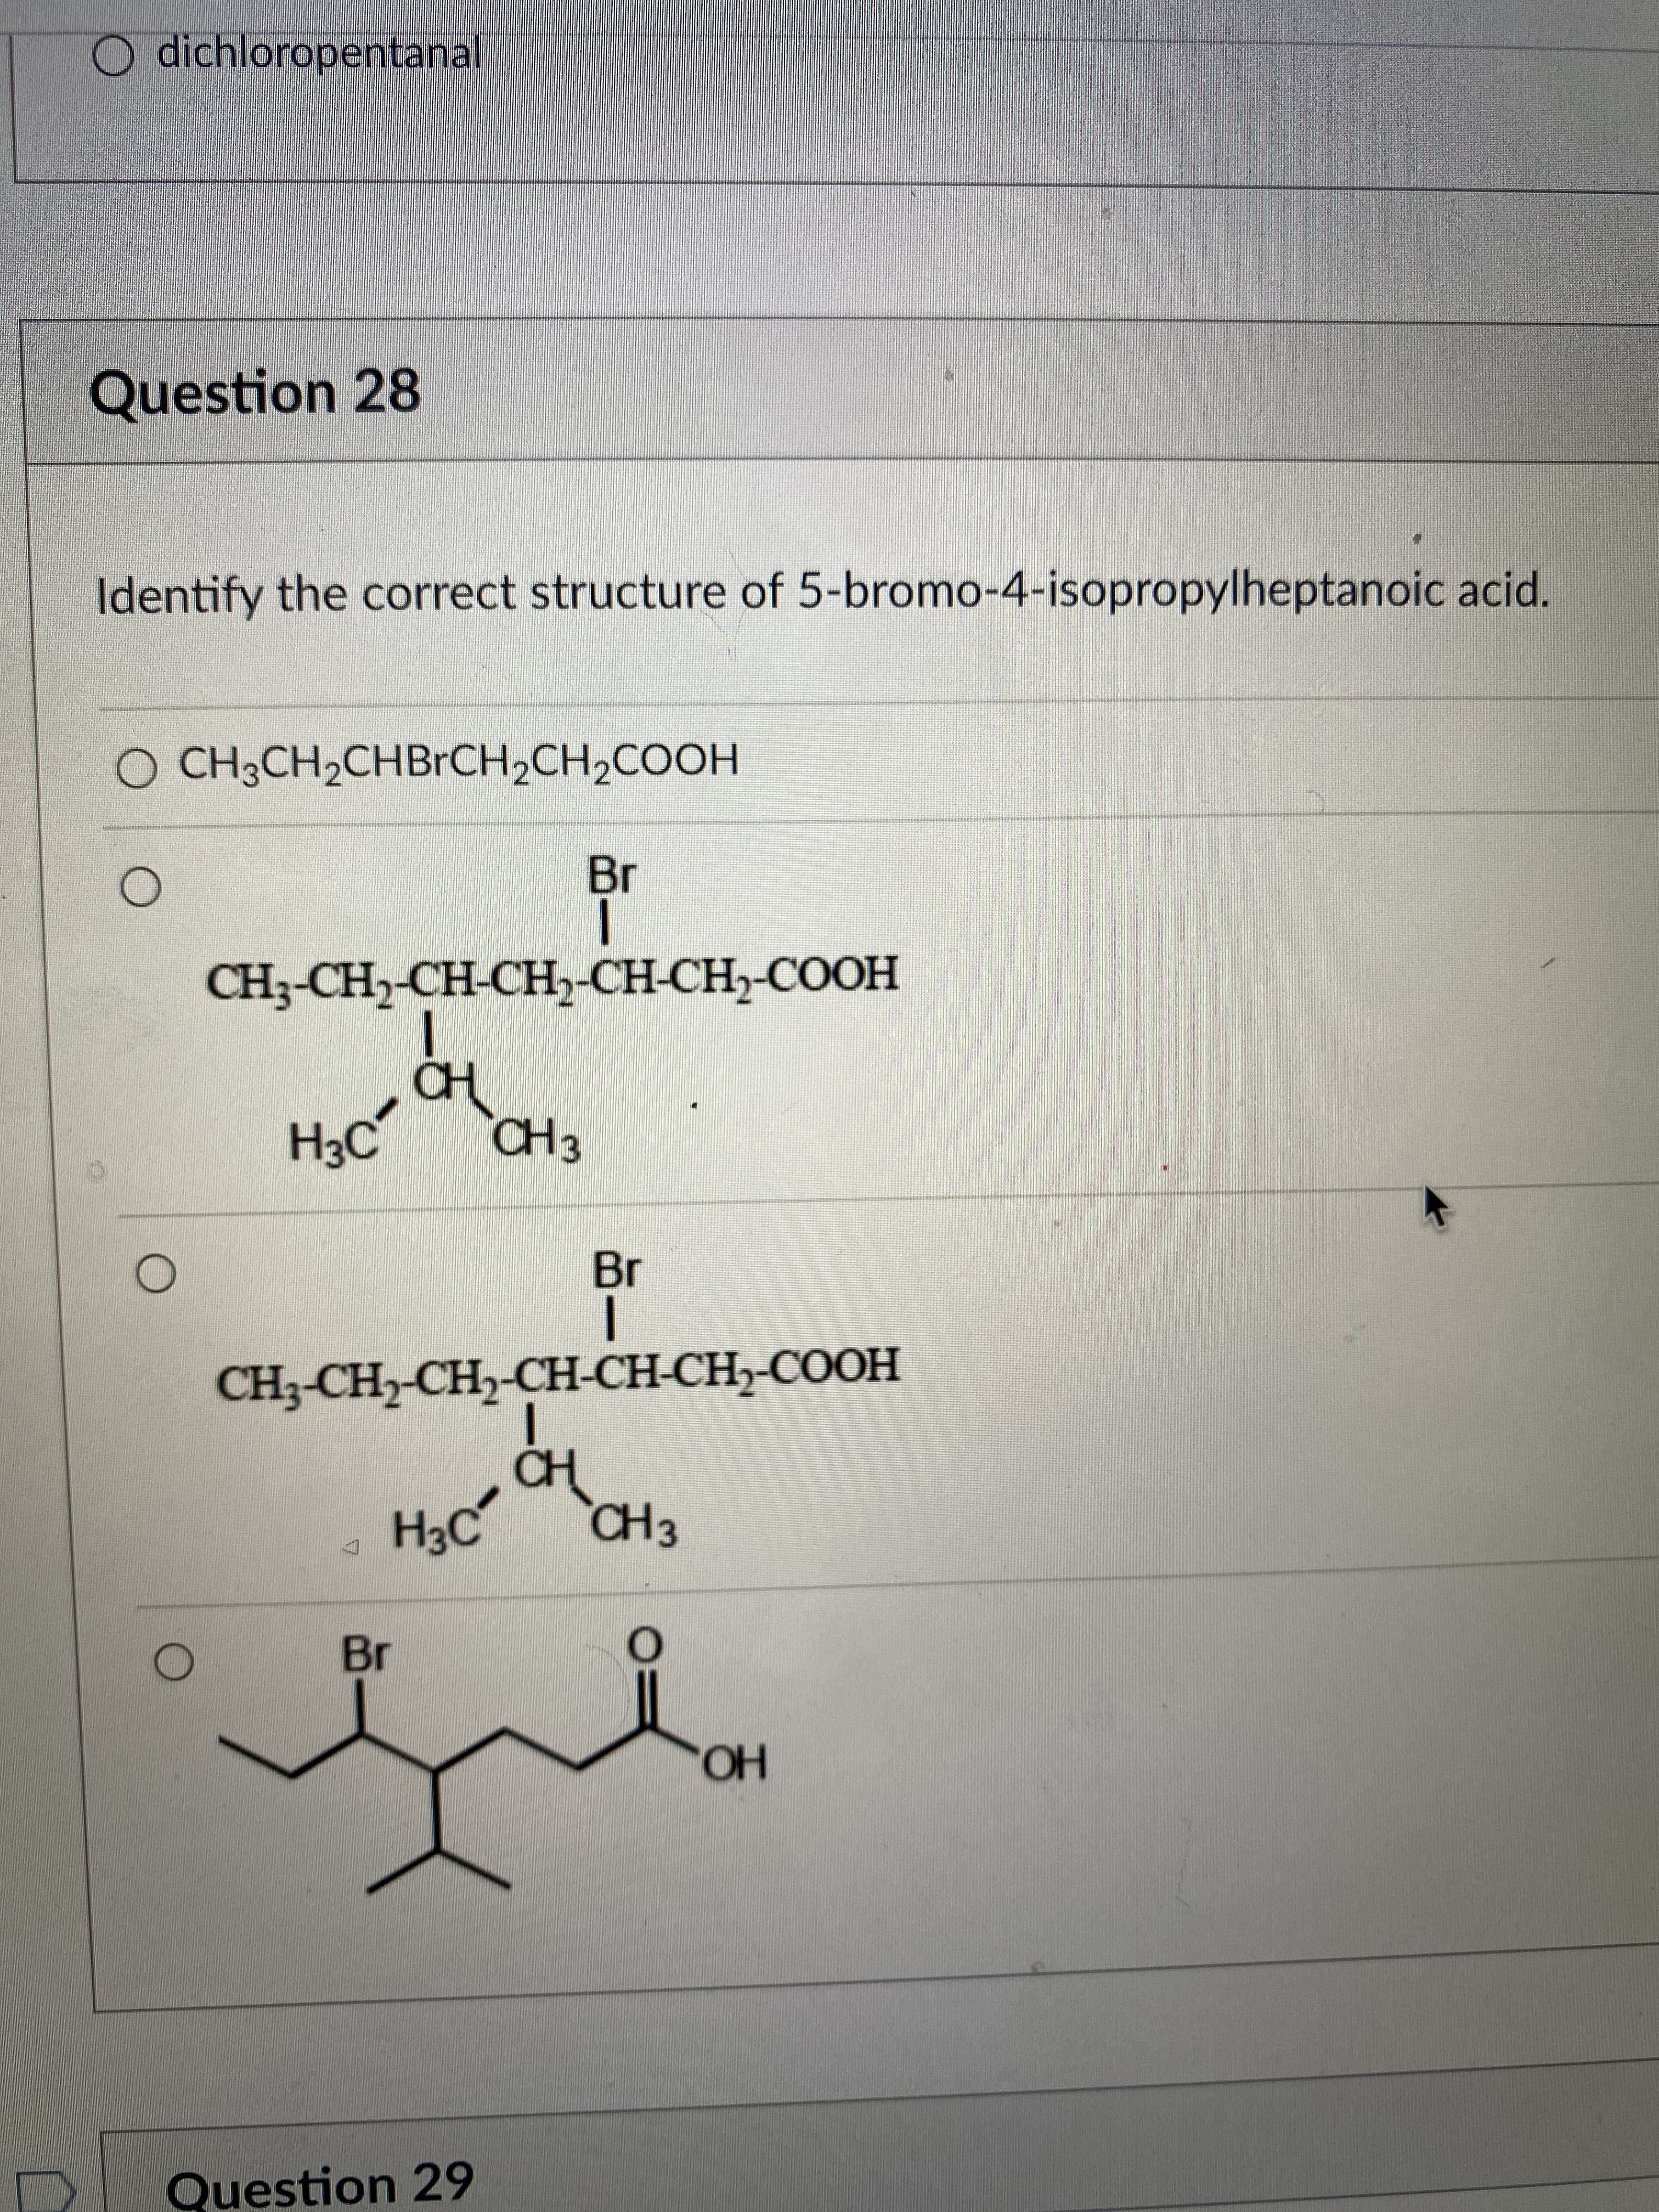 Identify the correct structure of 5-bromo-4-isopropylheptanoic acid.
